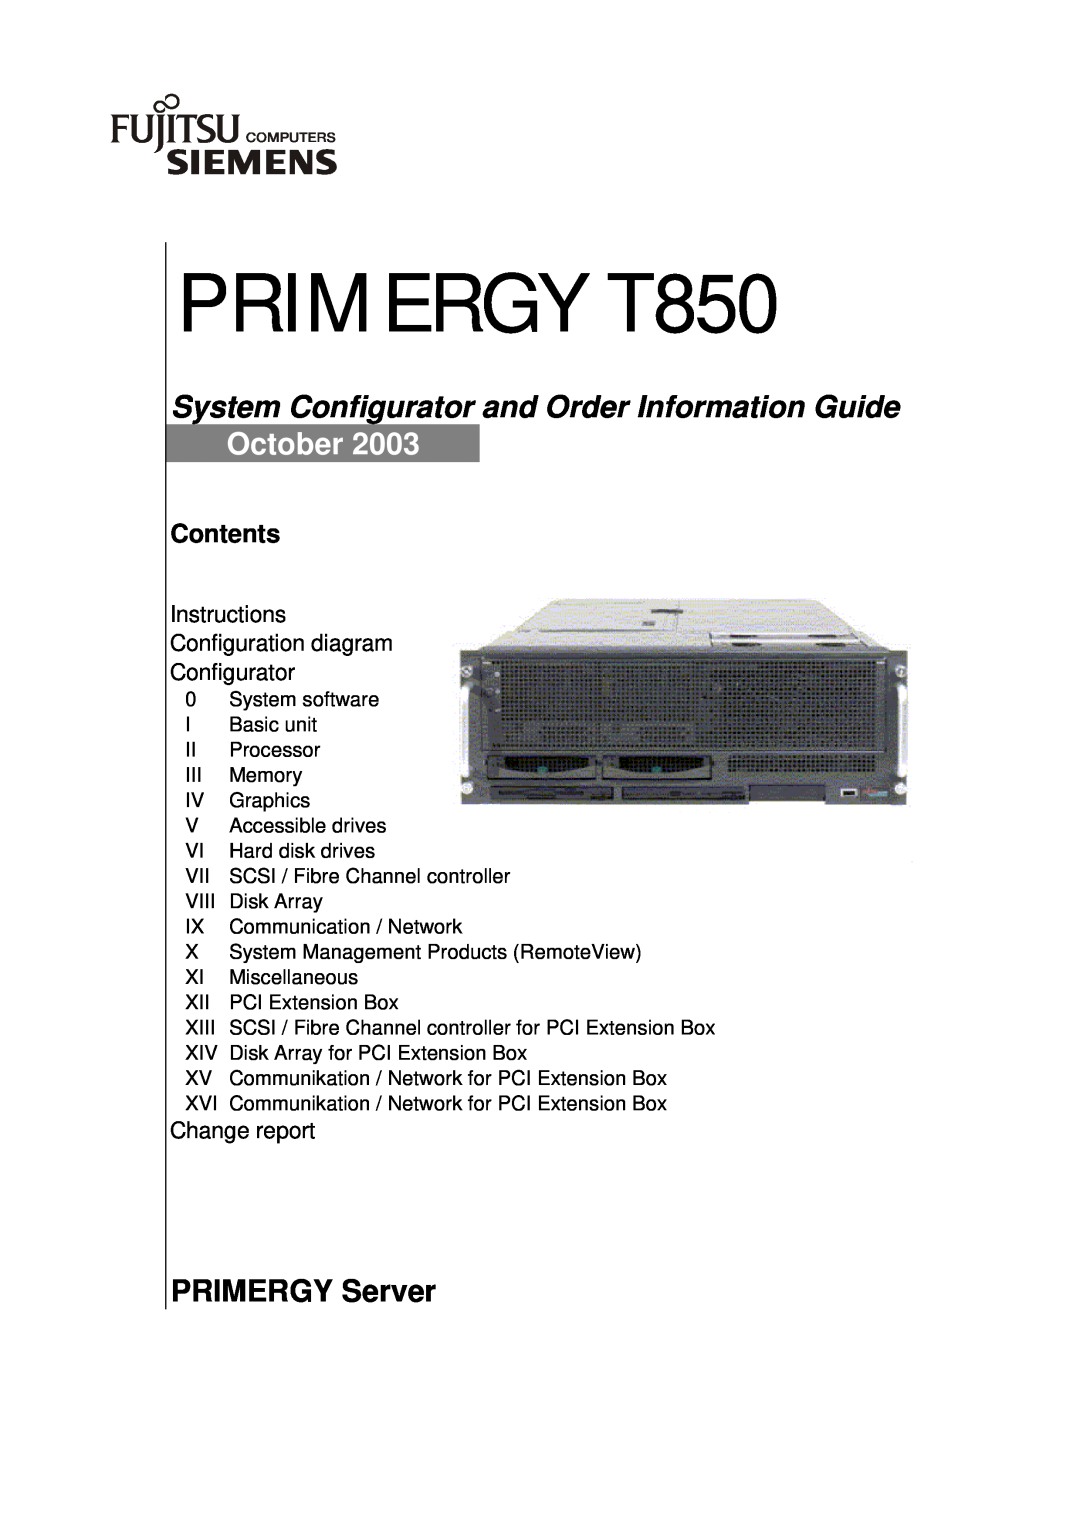 Fujitsu manual PRIMERGY Server, PRIMERGY T850, System Configurator and Order Information Guide, October, Contents 